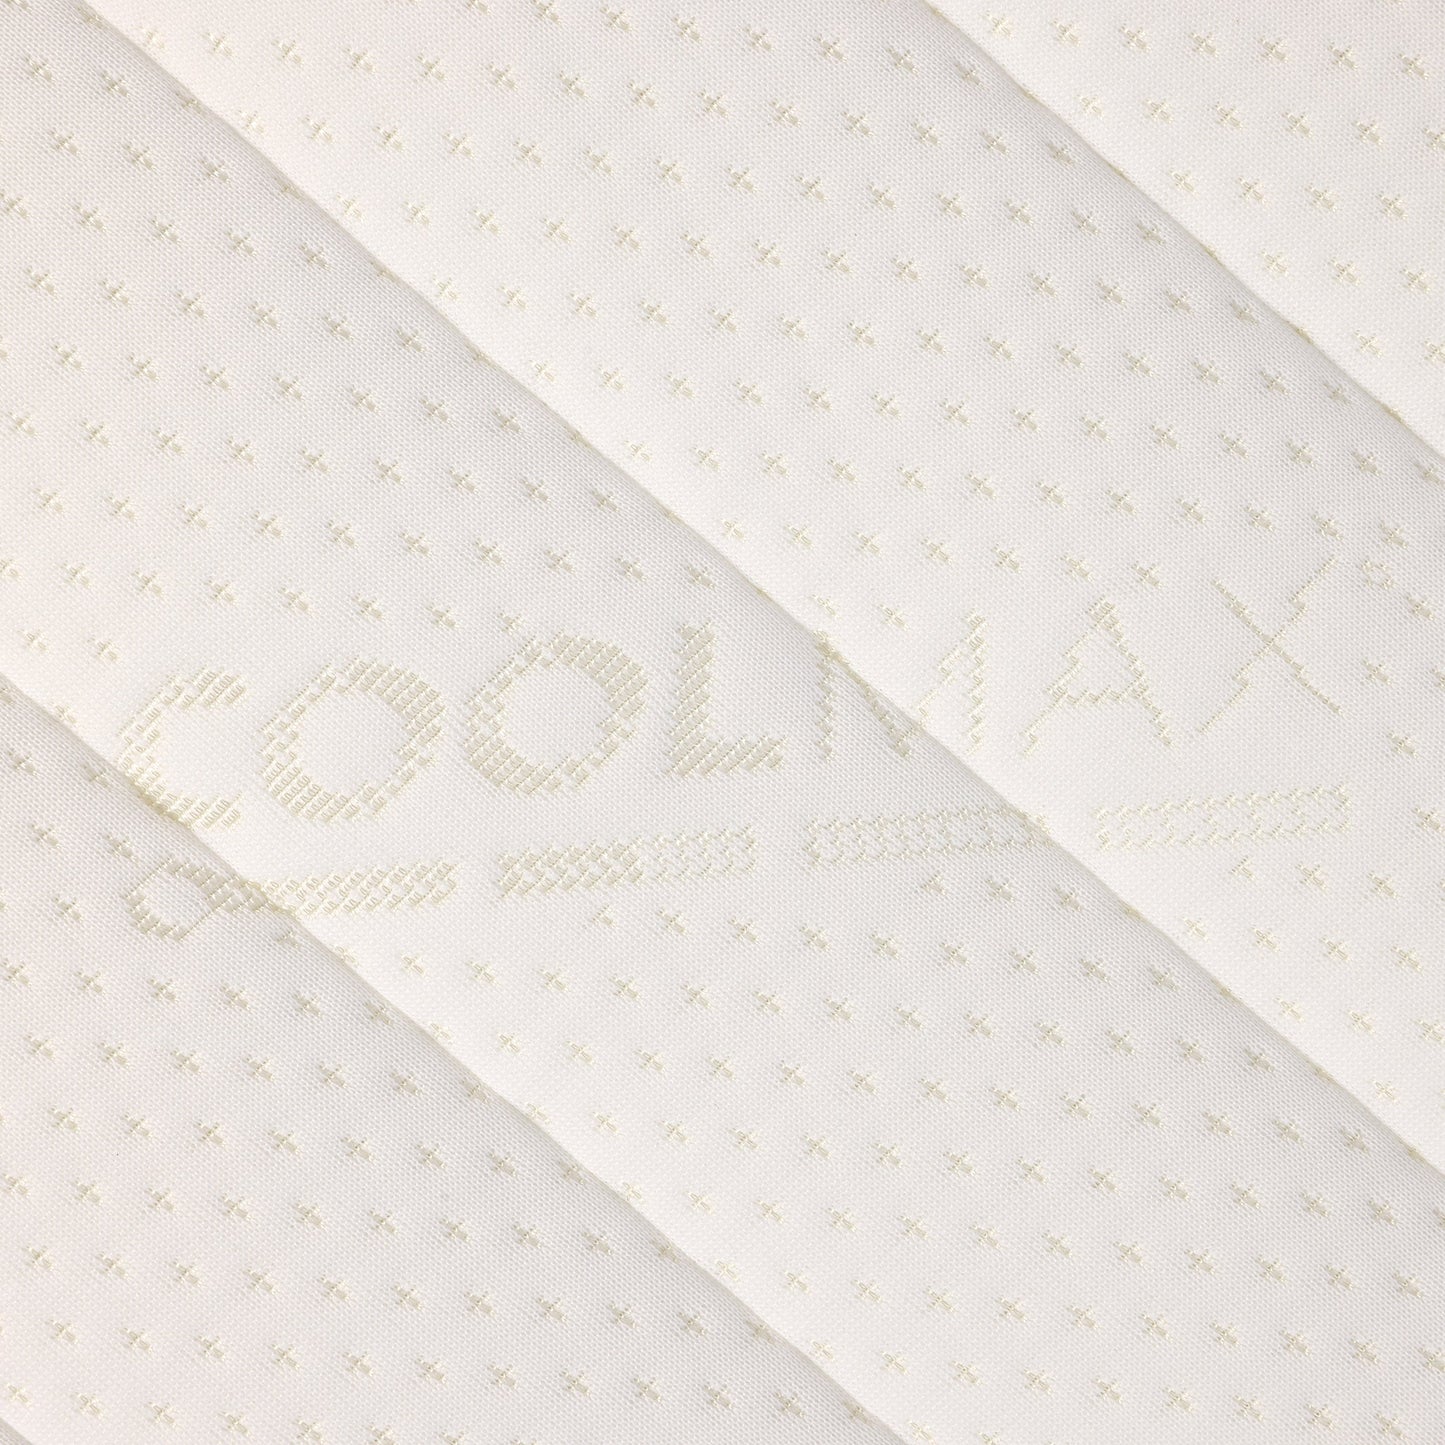 Ultima75 Adjustable Bed Mattress – Memory Foam - Firm